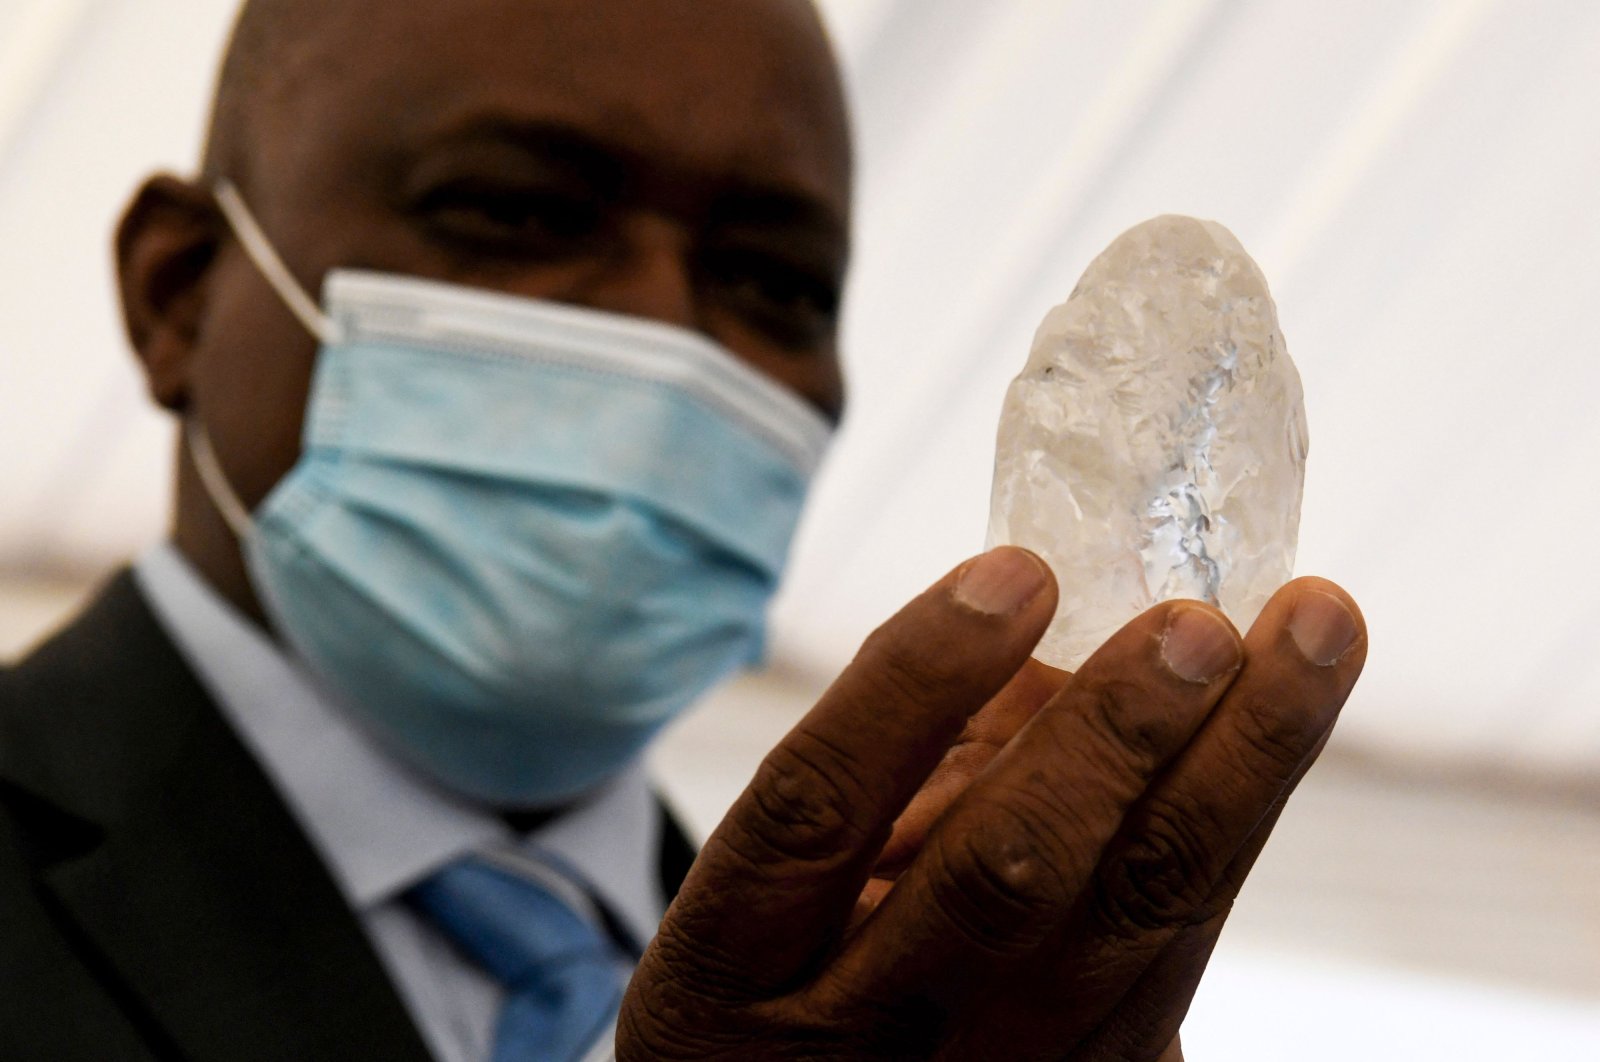 Botswana President Mokgweetsi Masisi holds a gem diamond in Gaborone, Botswana, on June 16, 2021. (AFP Photo)